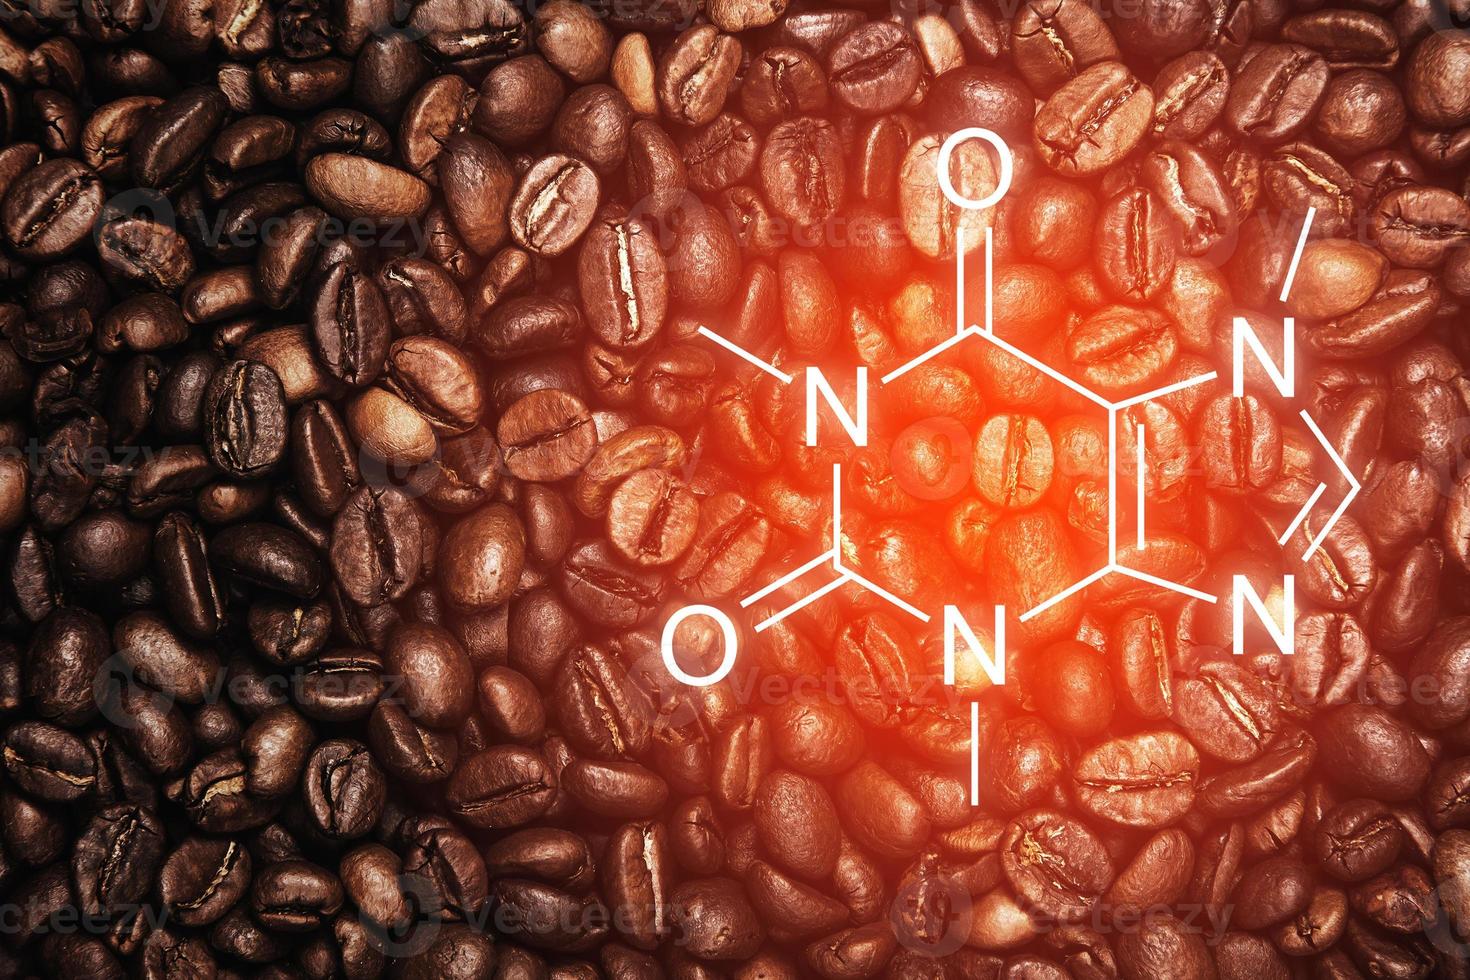 Roasted coffee beans and caffeine formula photo